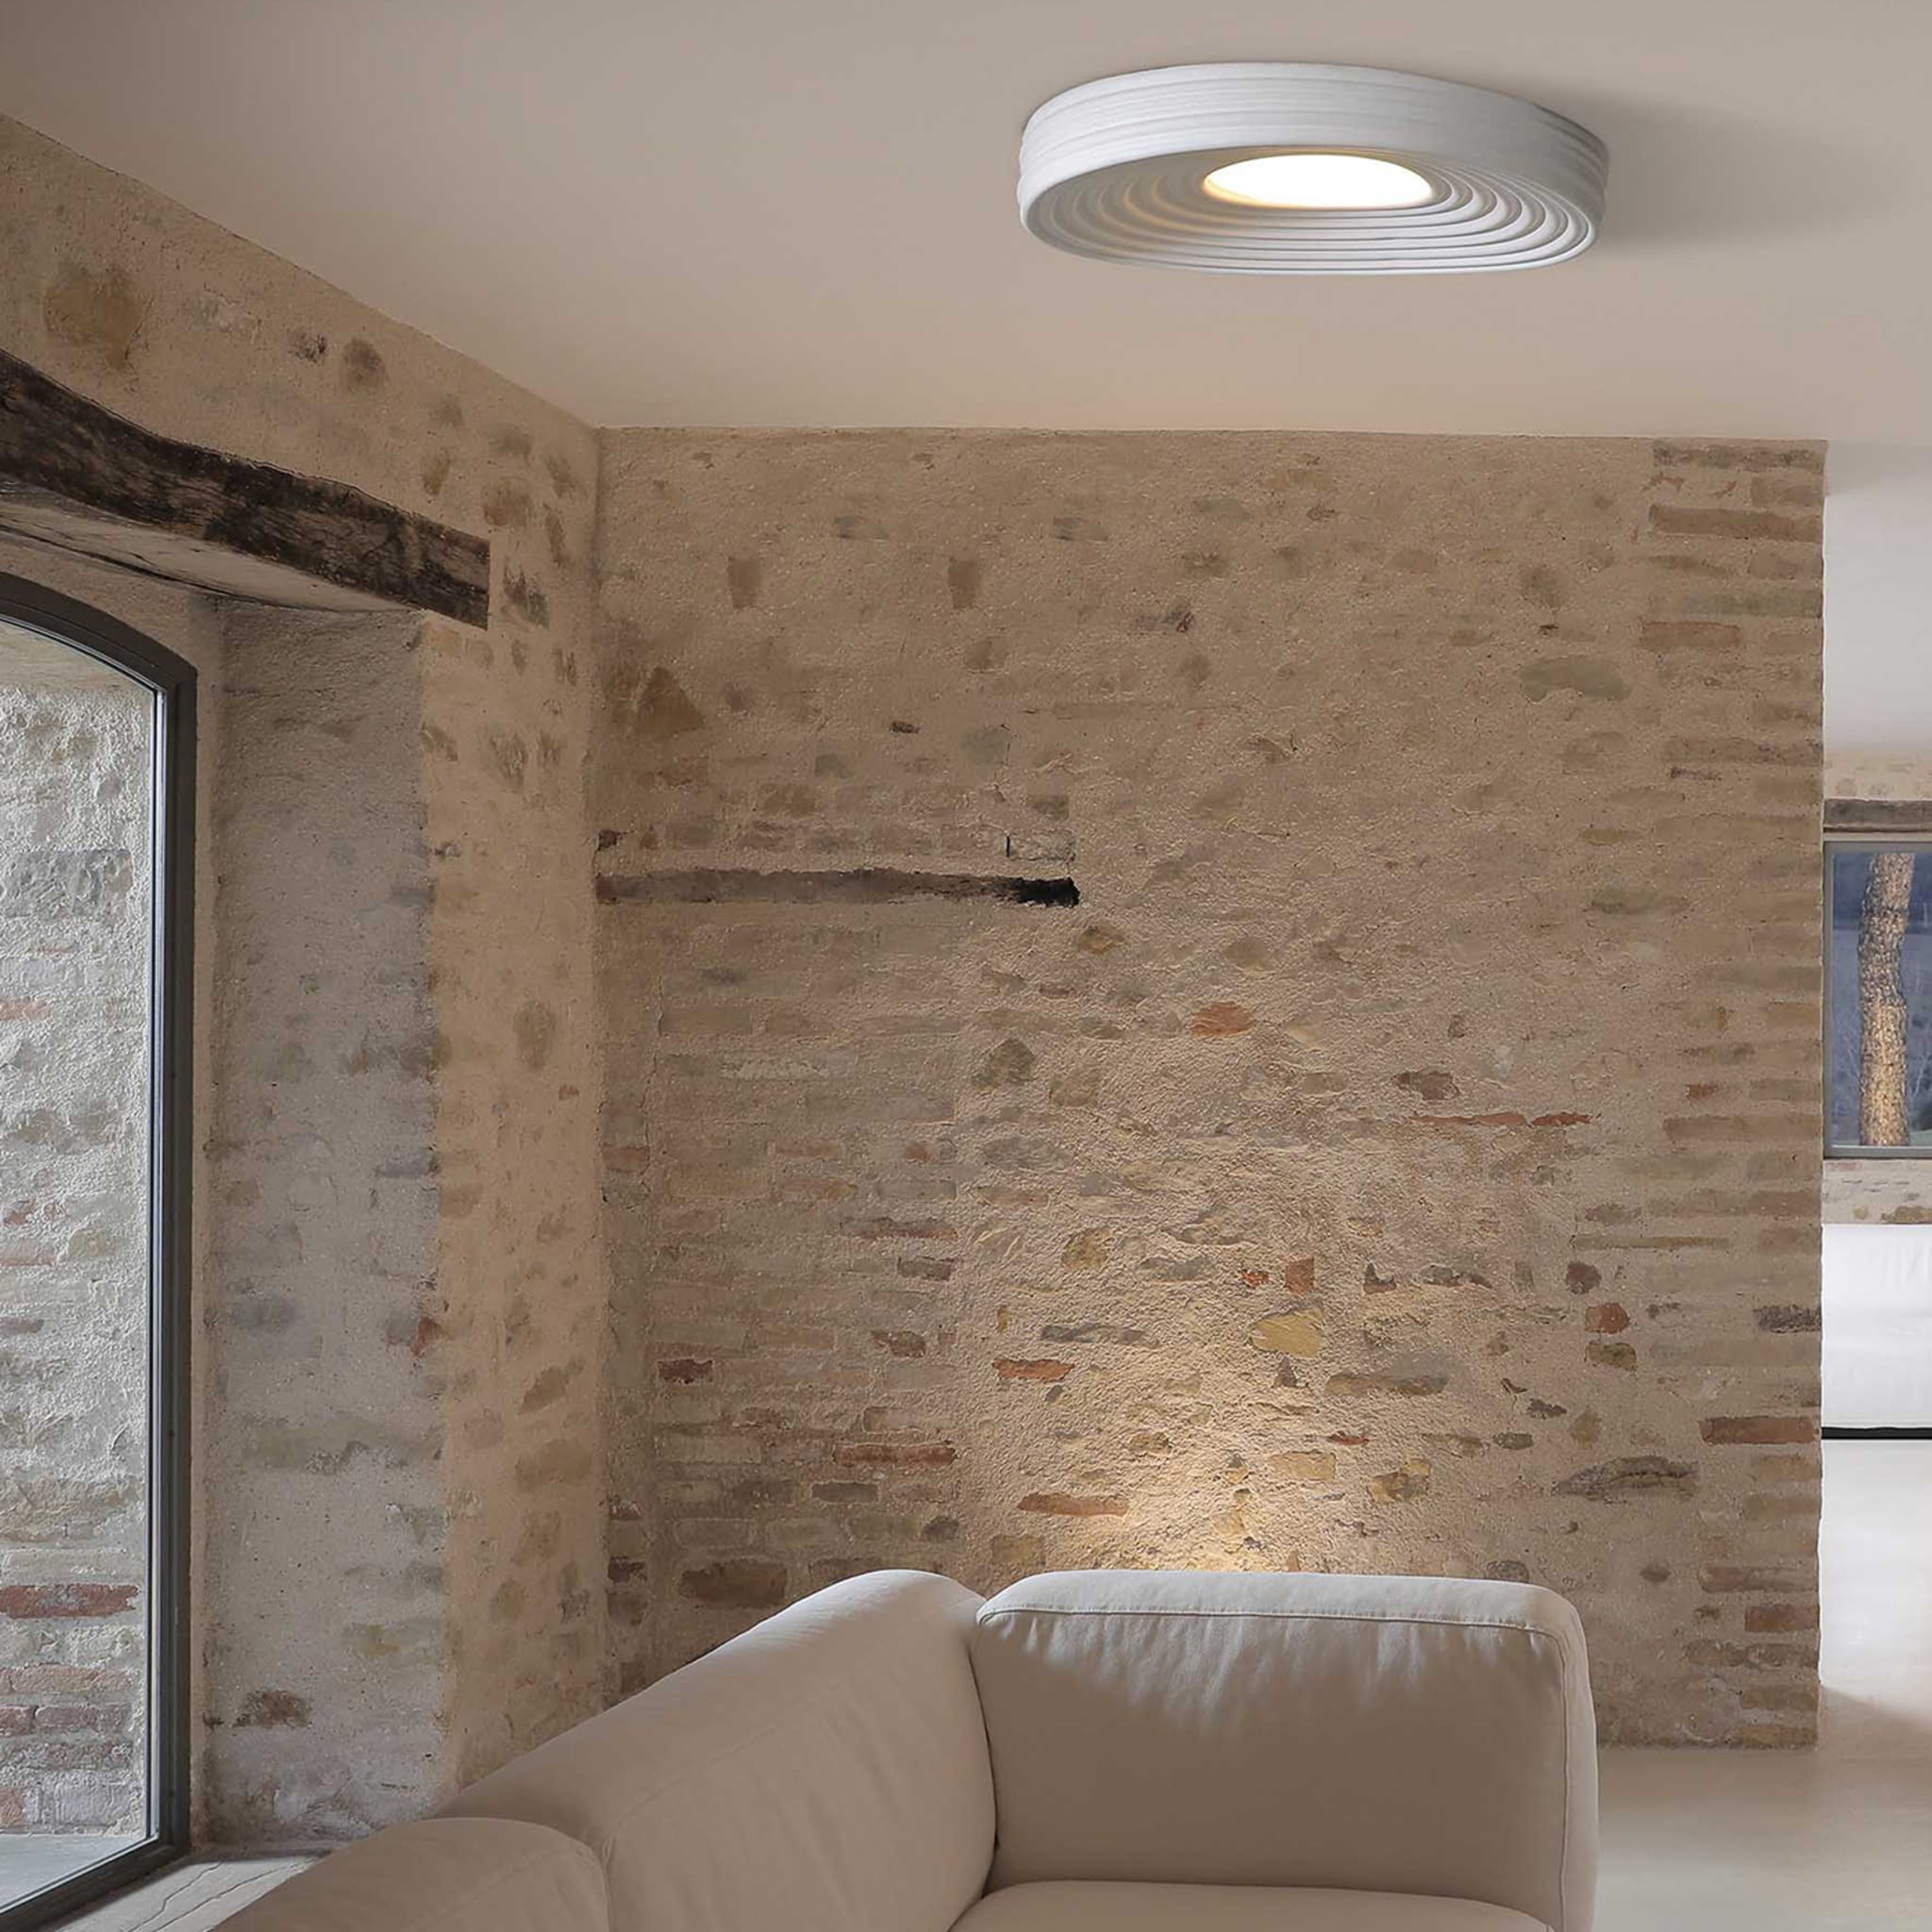 Roma Ceiling Lamp by Luca De Bona & Dario De Meo - Alternative view 1